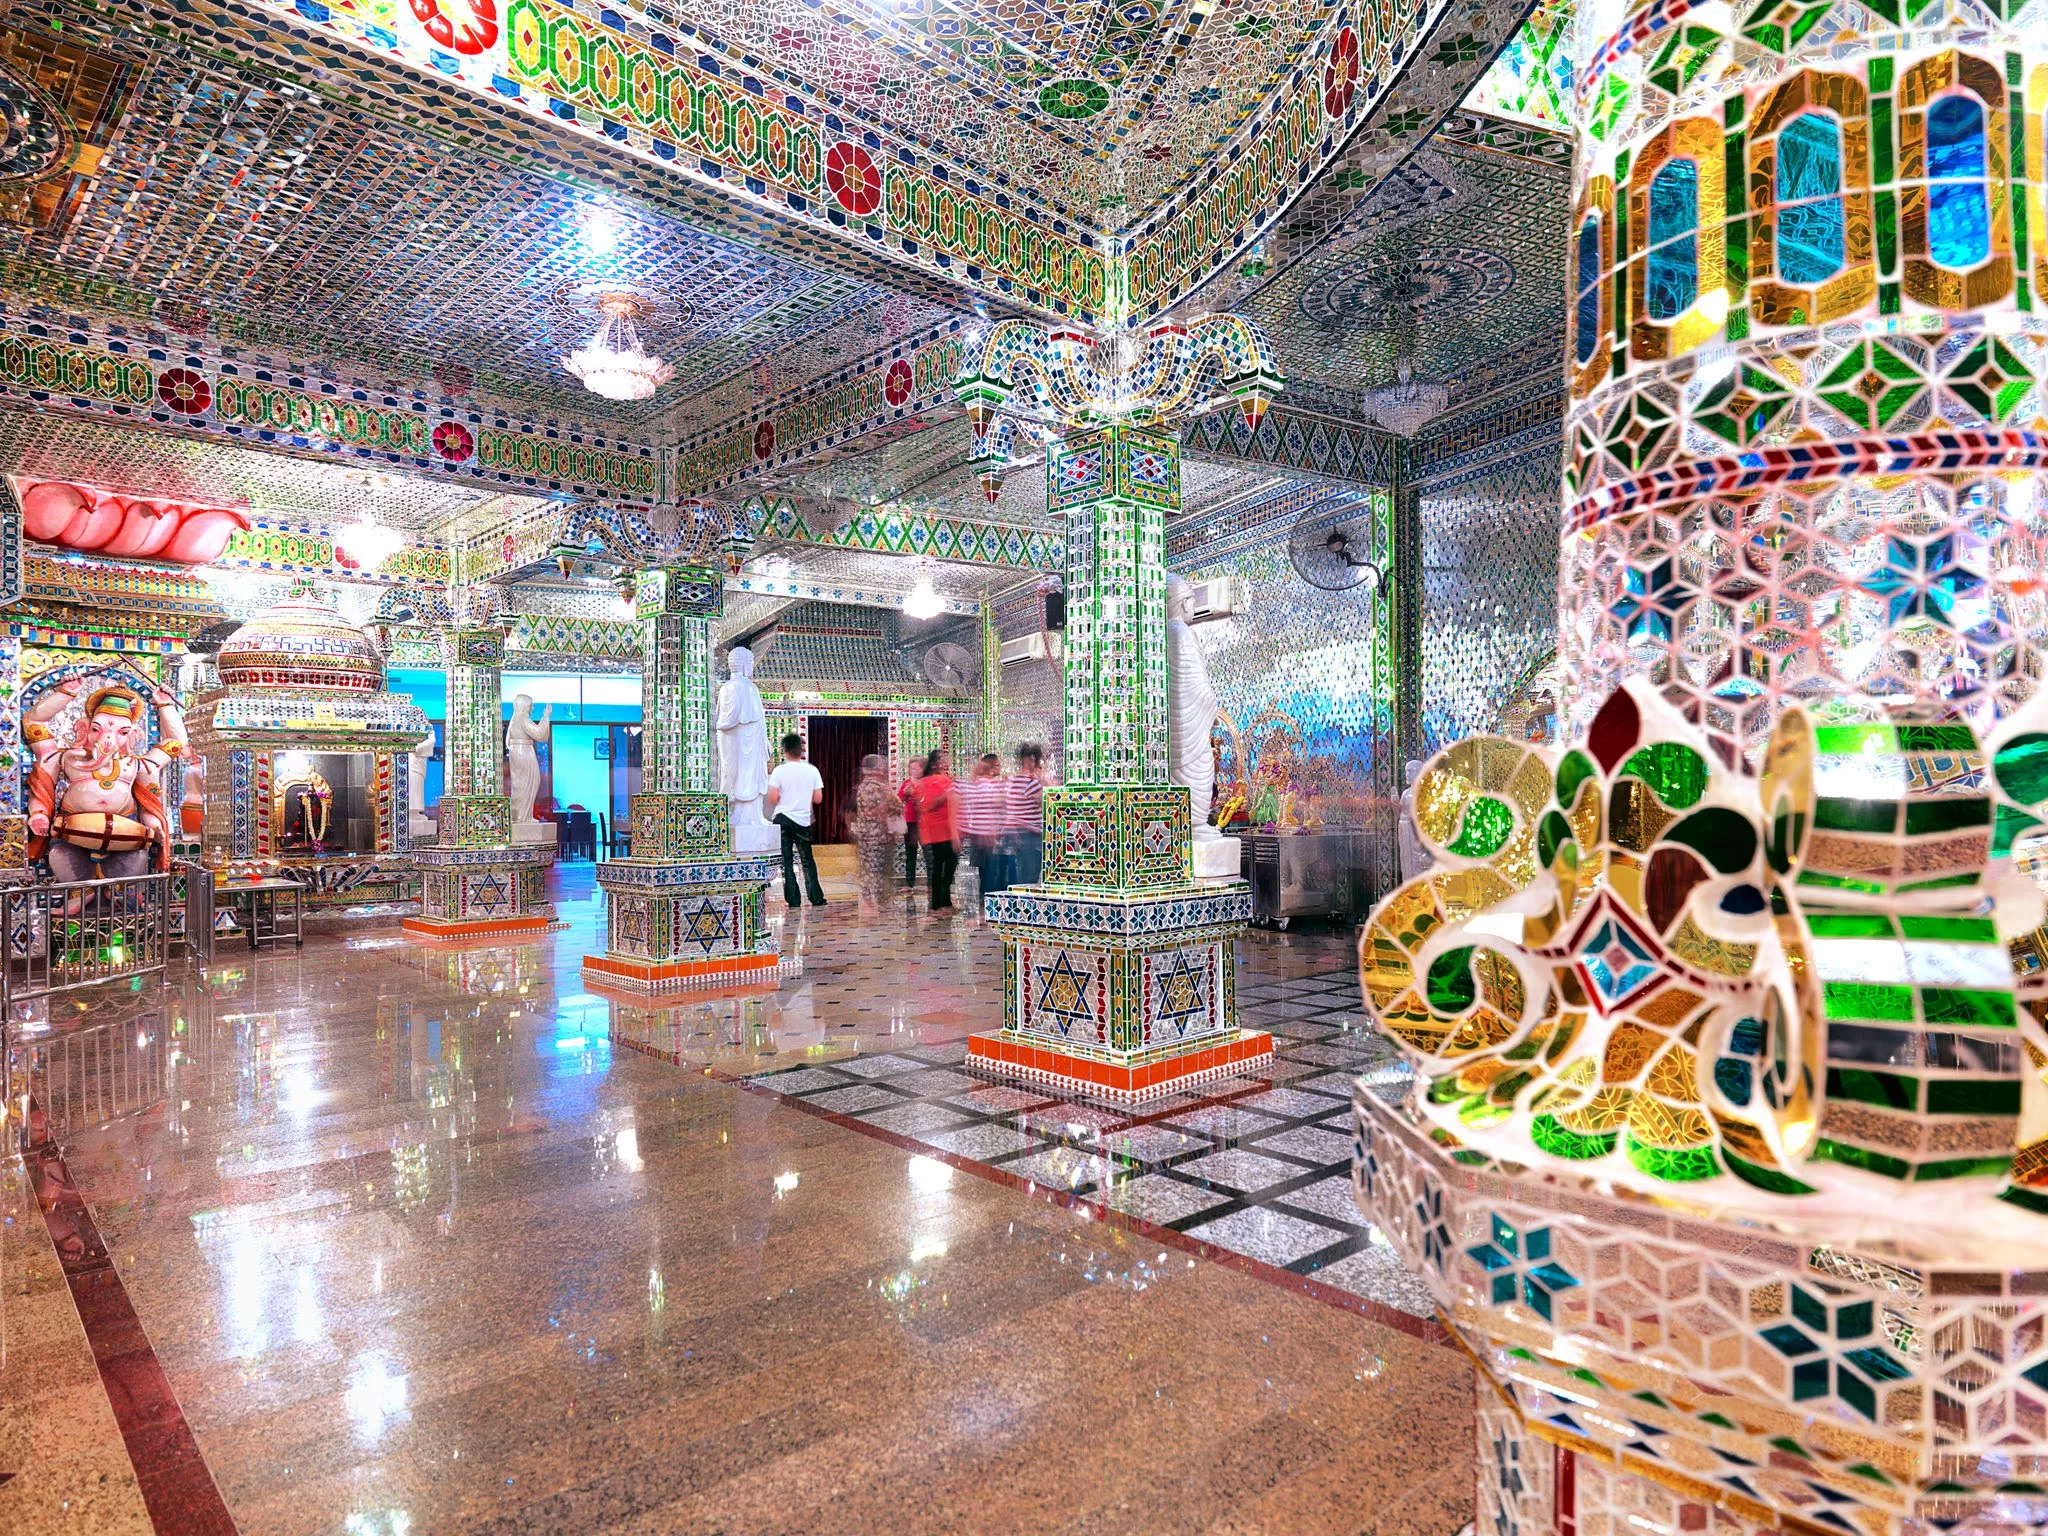 Arulmigu Sri Rajakaliamman Glass in Malaysia, East Asia | Architecture - Rated 3.4